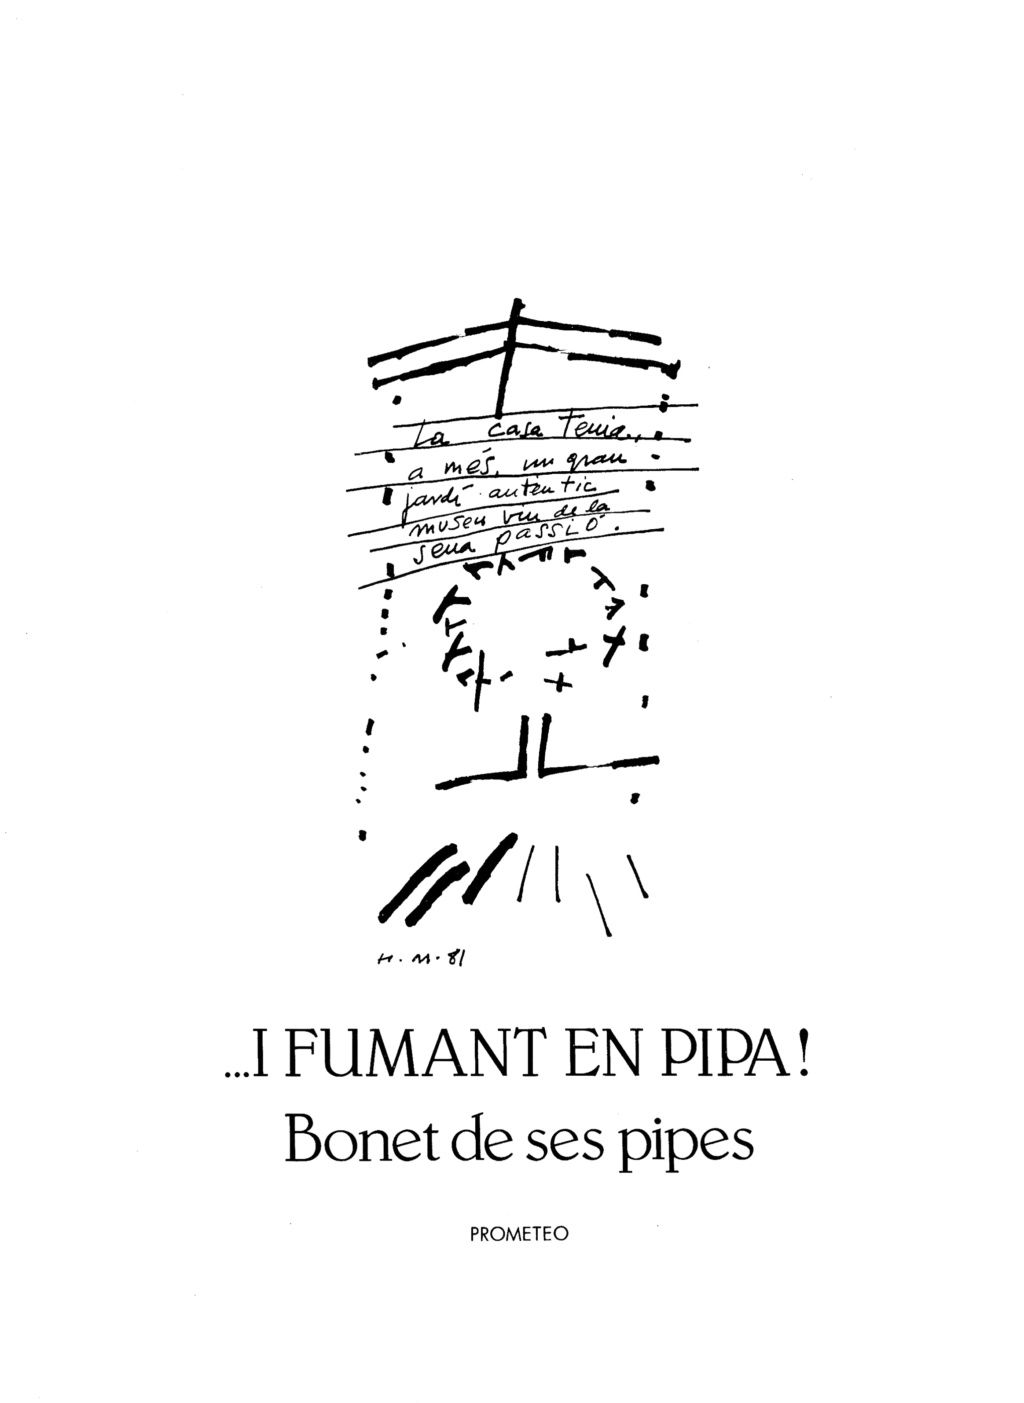 Torneo de Fumada Lenta "Bonet de ses Pipes" del Pipa Club de España - Monasterio de Lluc, Mallorca, 9nov2019 - Página 2 I_fuma25